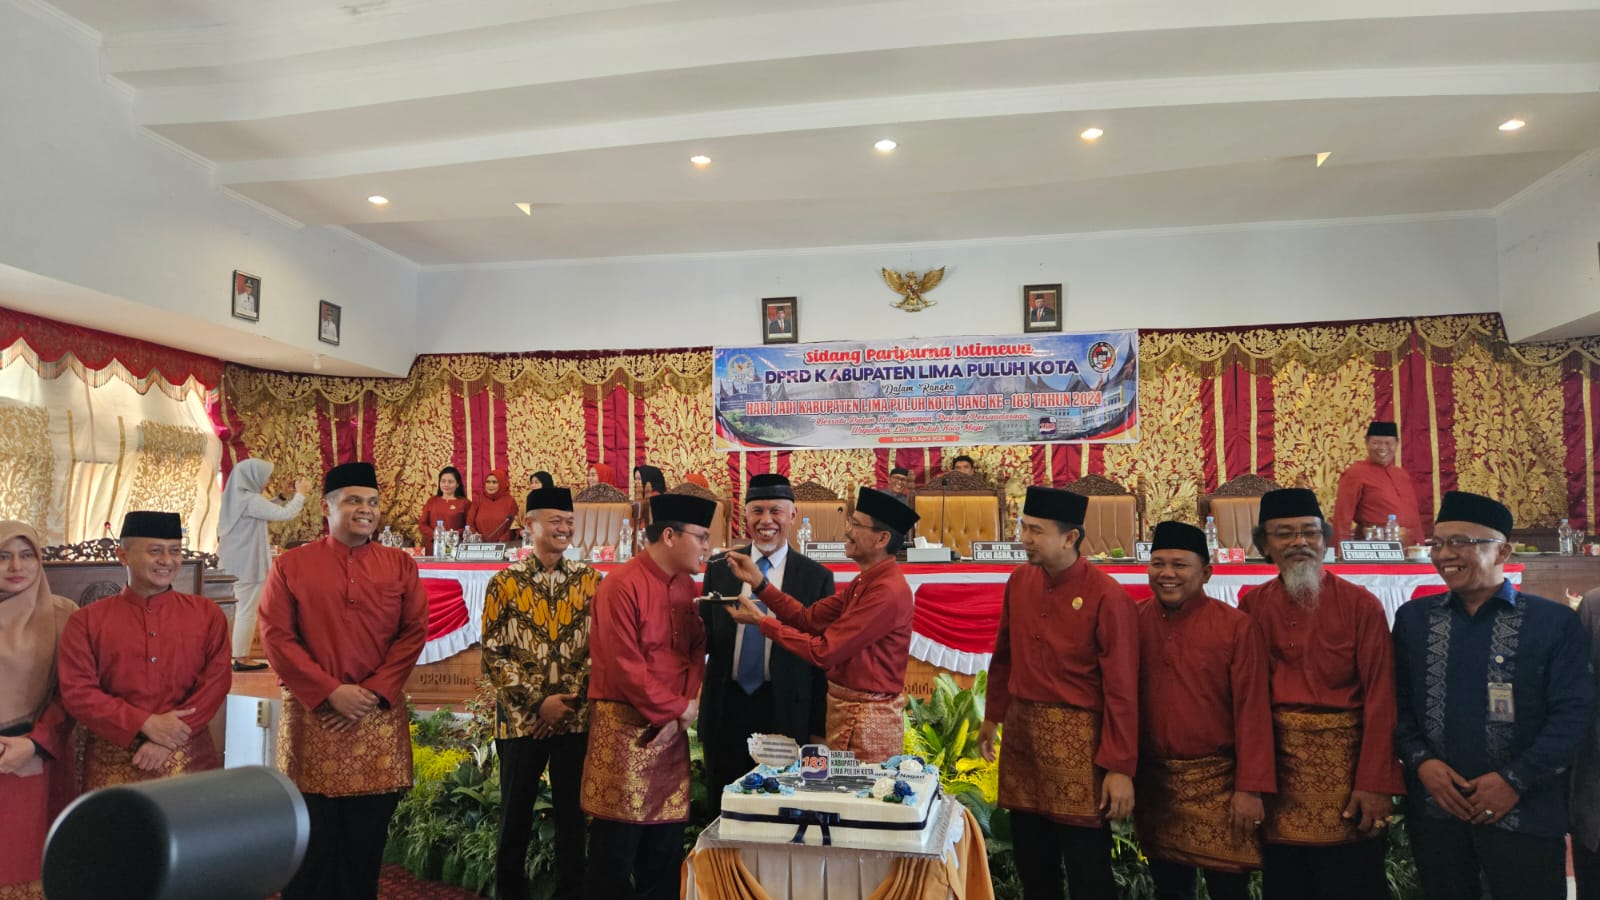 Bupati Safaruddin Dt. Bandaro Rajo menyuapi Wabup Rizki Kurniawan Nakasri kue Ulang Tahun Kabuoaten Limapuluh Kota